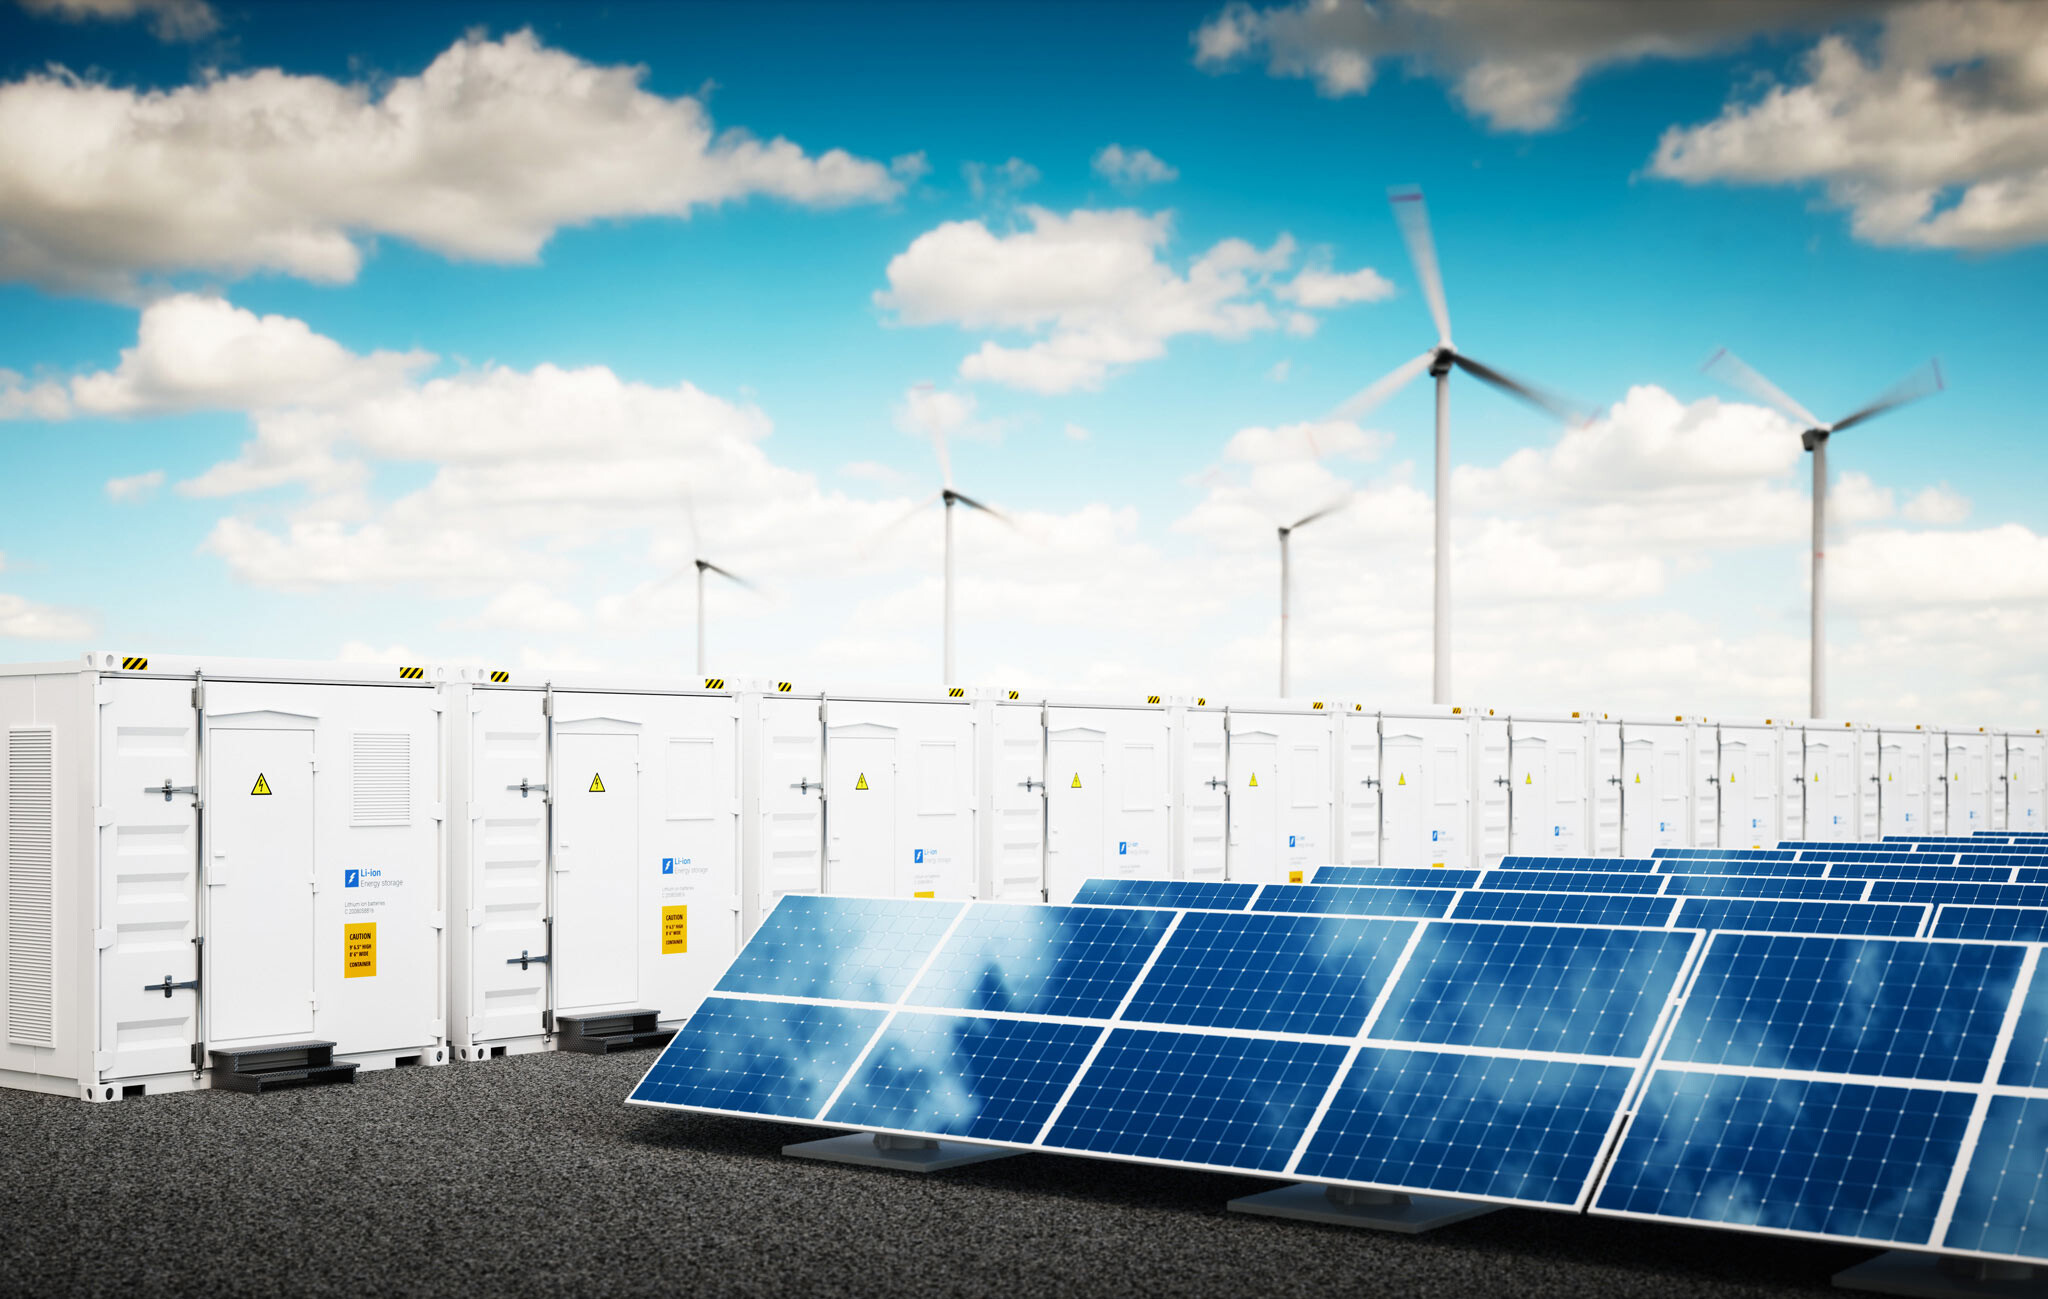 More information about "Μπορούν οι ΑΠΕ να καλύψουν τις ηλεκτρικές ανάγκες του Πλανήτη μας;"